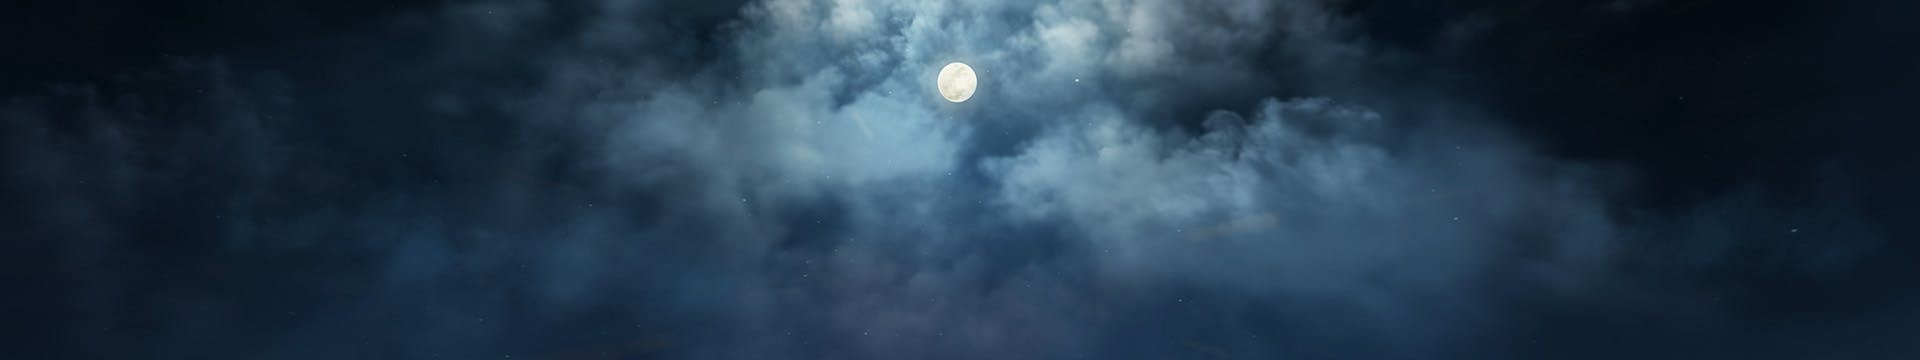 The moon shining thru the clouds on a dark night.